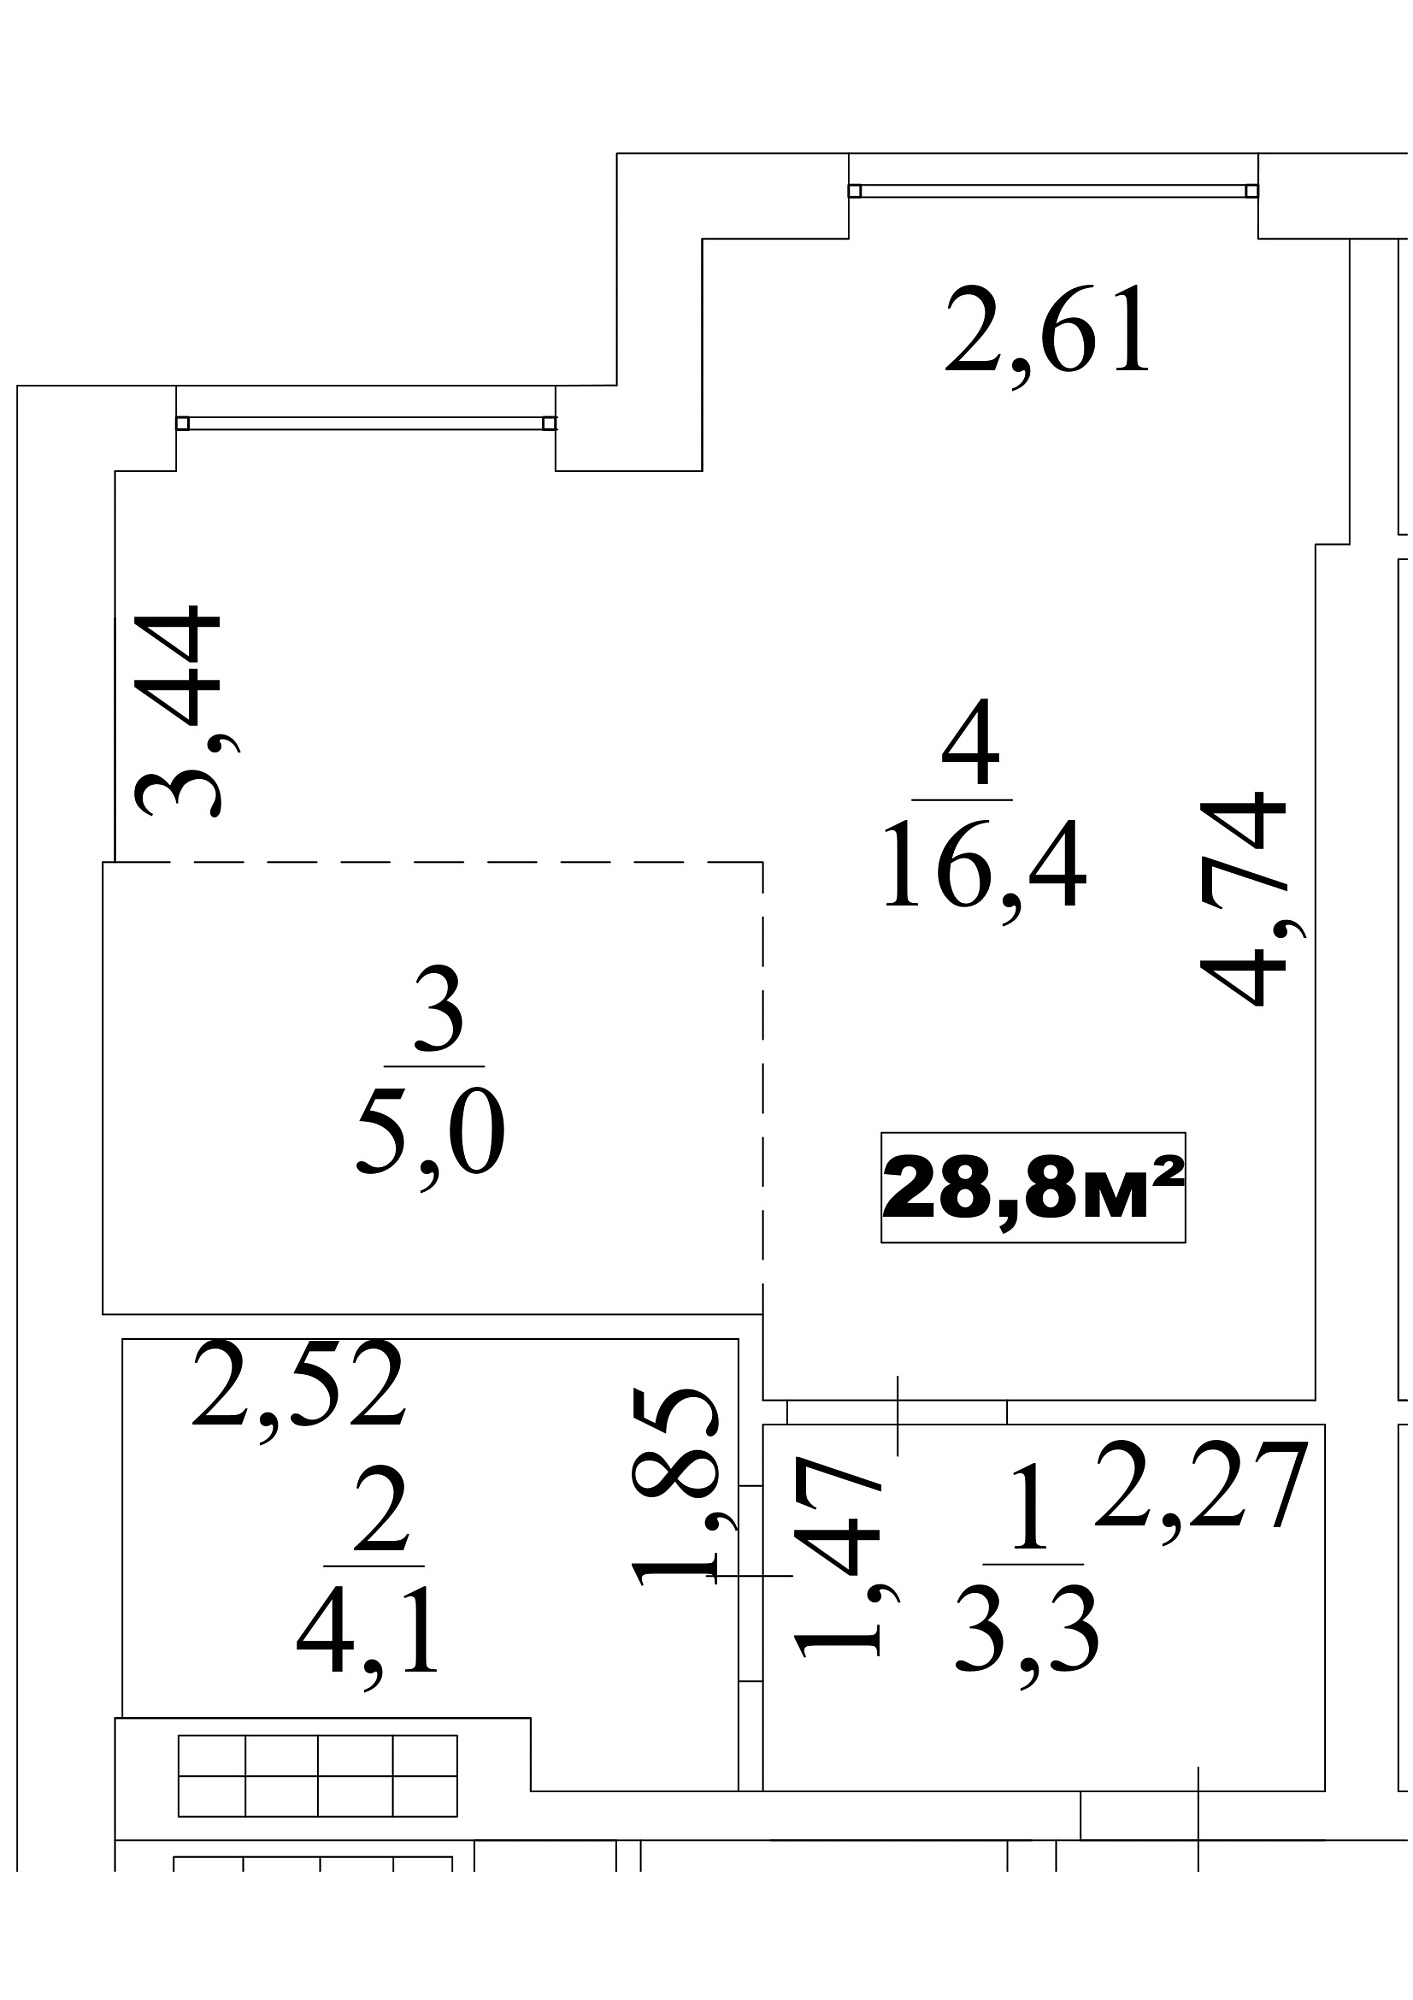 Planning Smart flats area 28.8m2, AB-10-03/0021б.